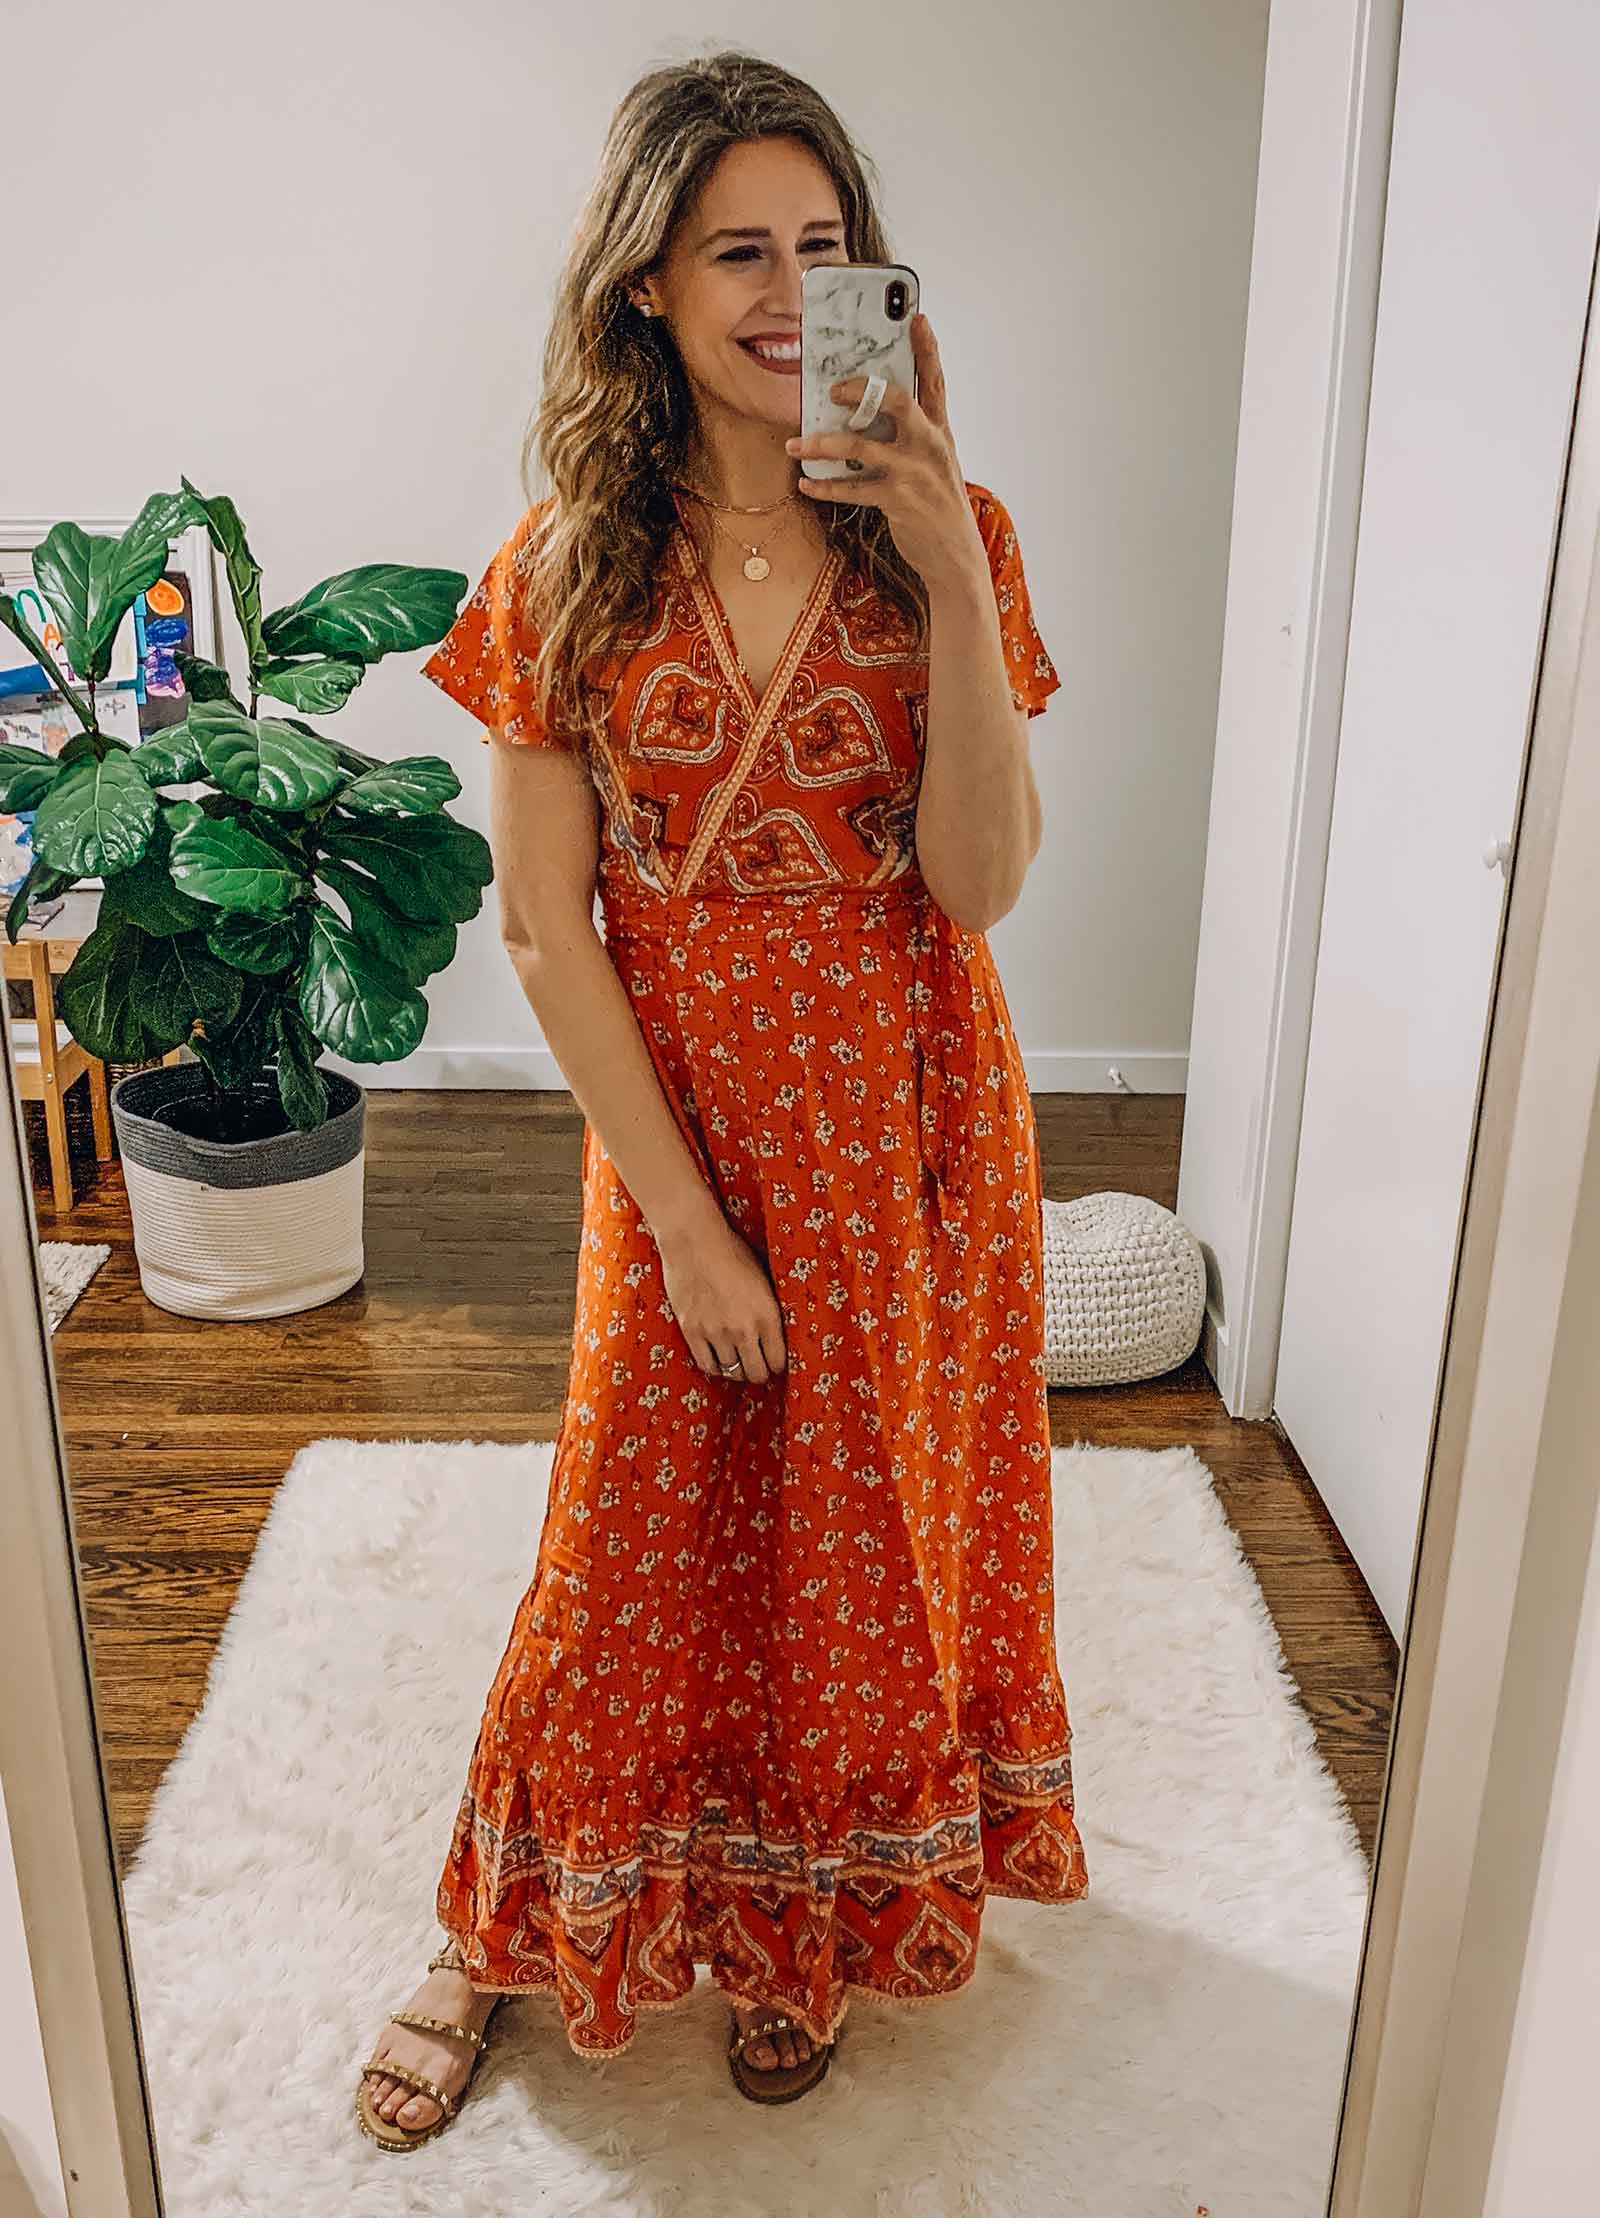 Amazon Spring/Summer Dresses Under $30